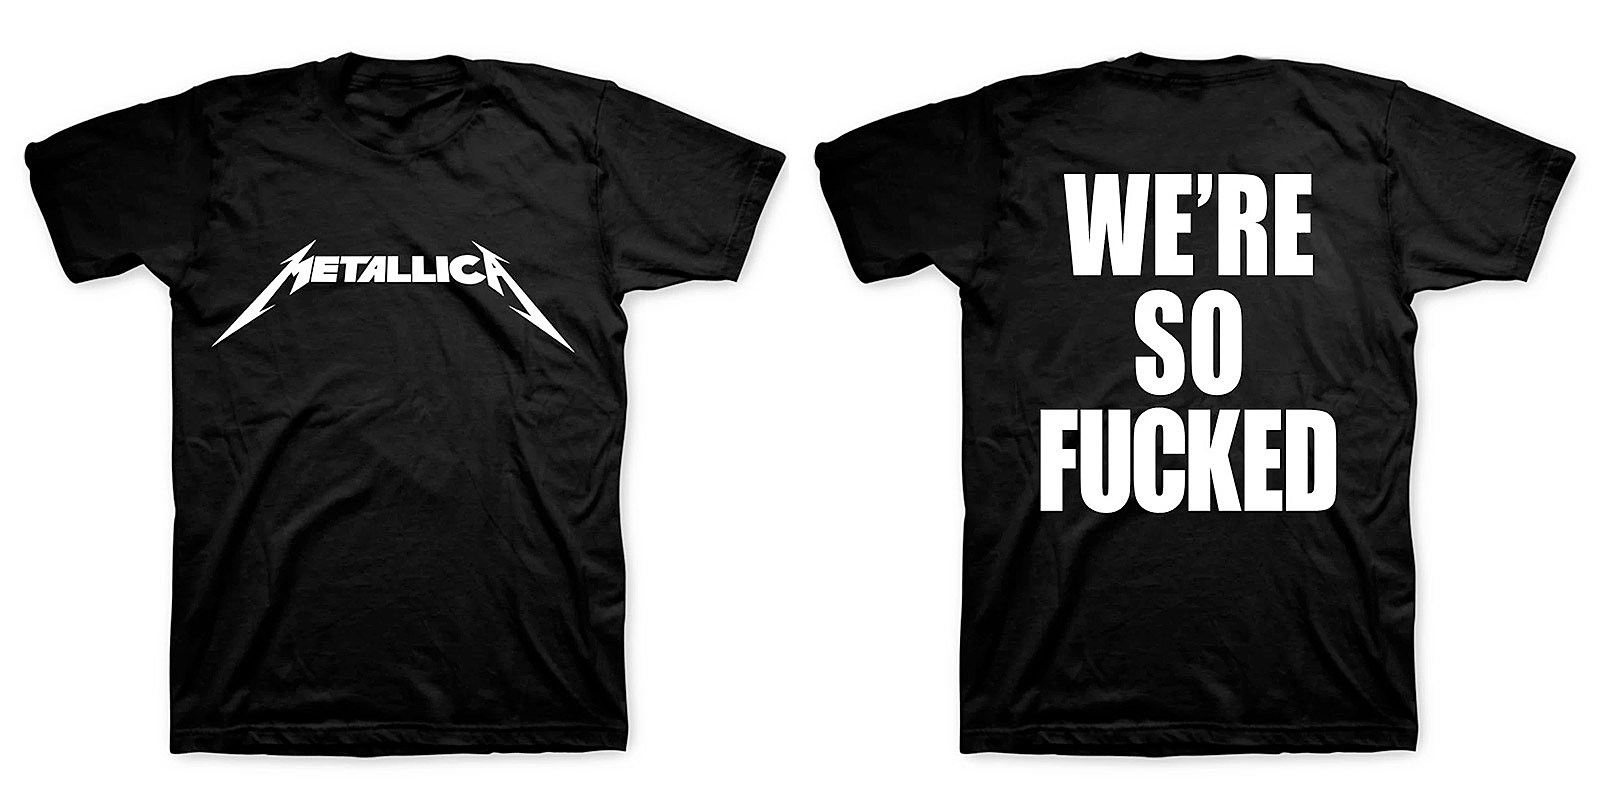 Metallica We're So Fucked t-shirt